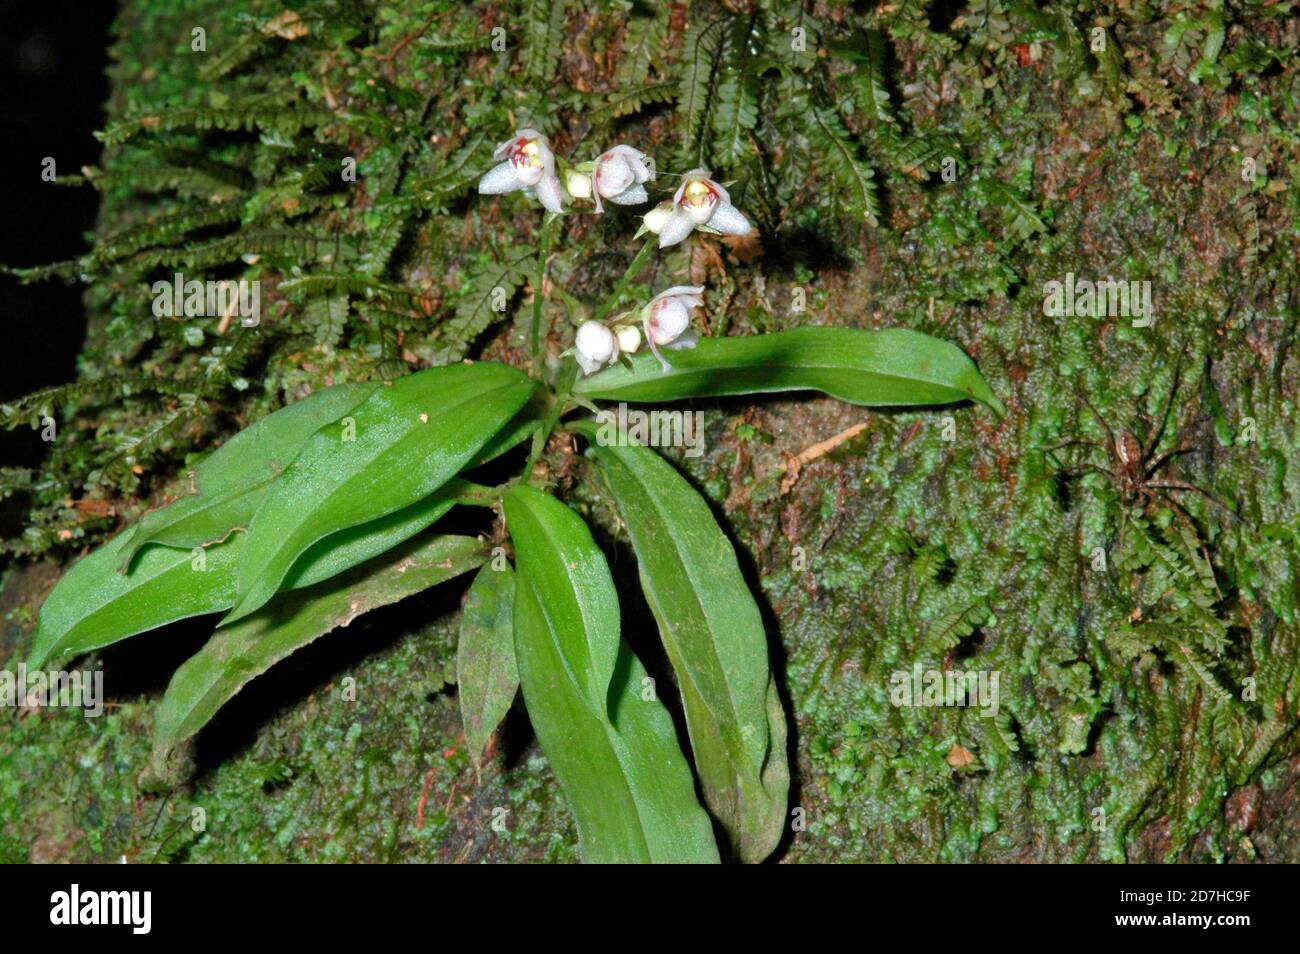 TÌNH YÊU LAN 4 - Page 47 Cheiradenia-orchid-cheiradenia-cuspidata-in-bloom-french-guyana-2D7HC9F